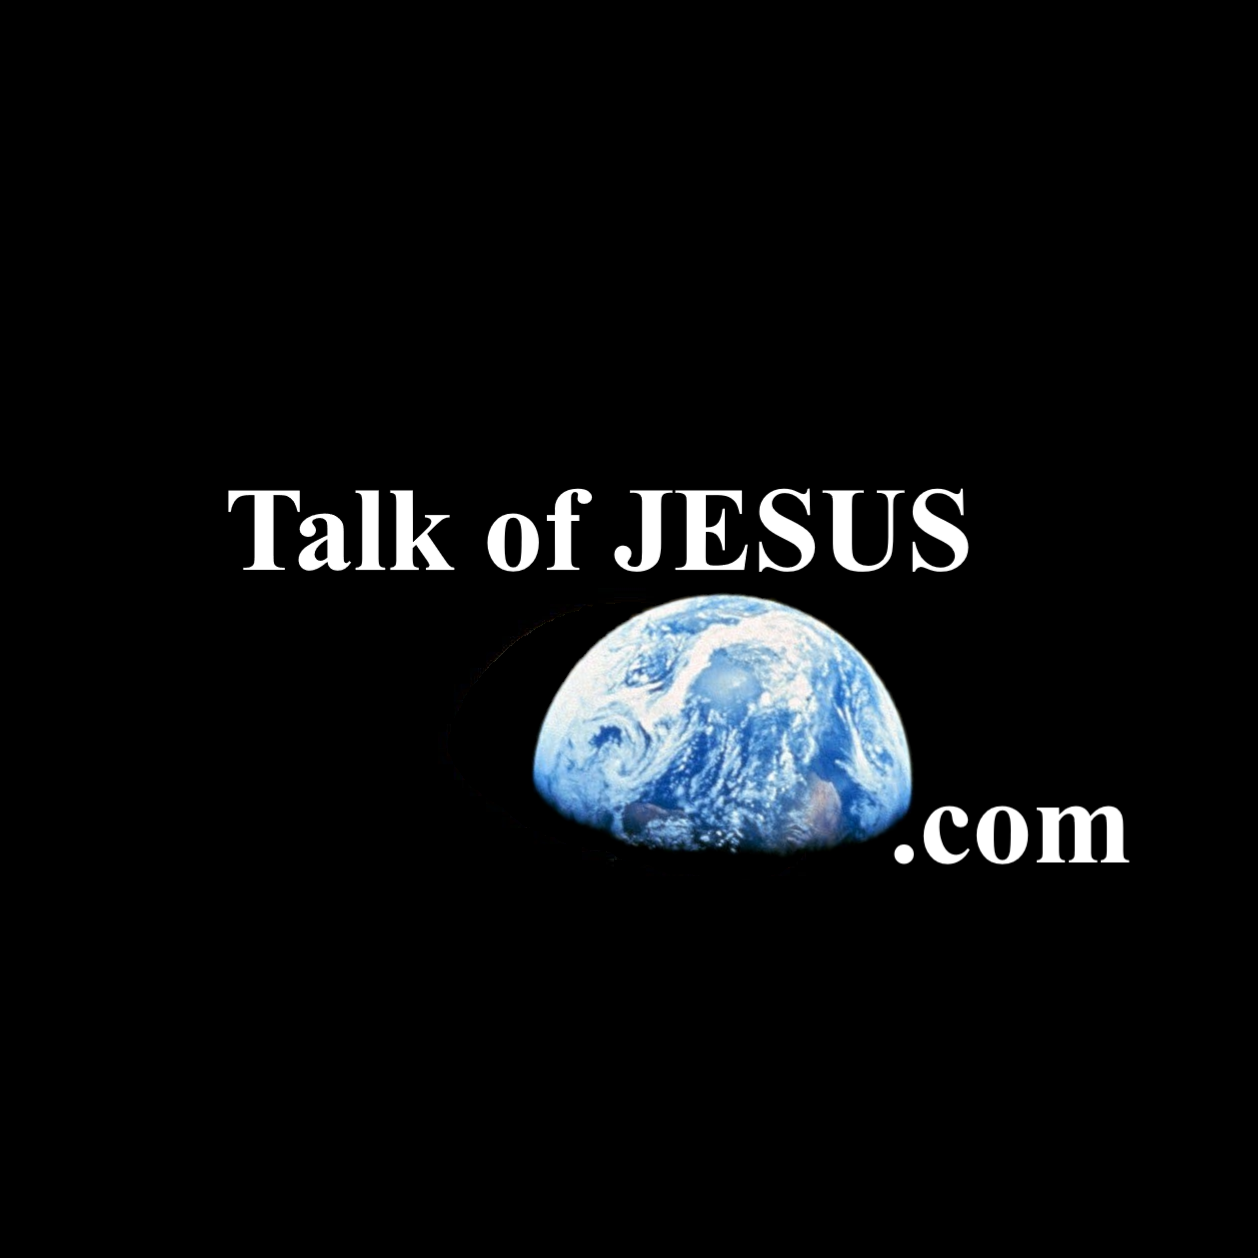 Talk of Jesus .com